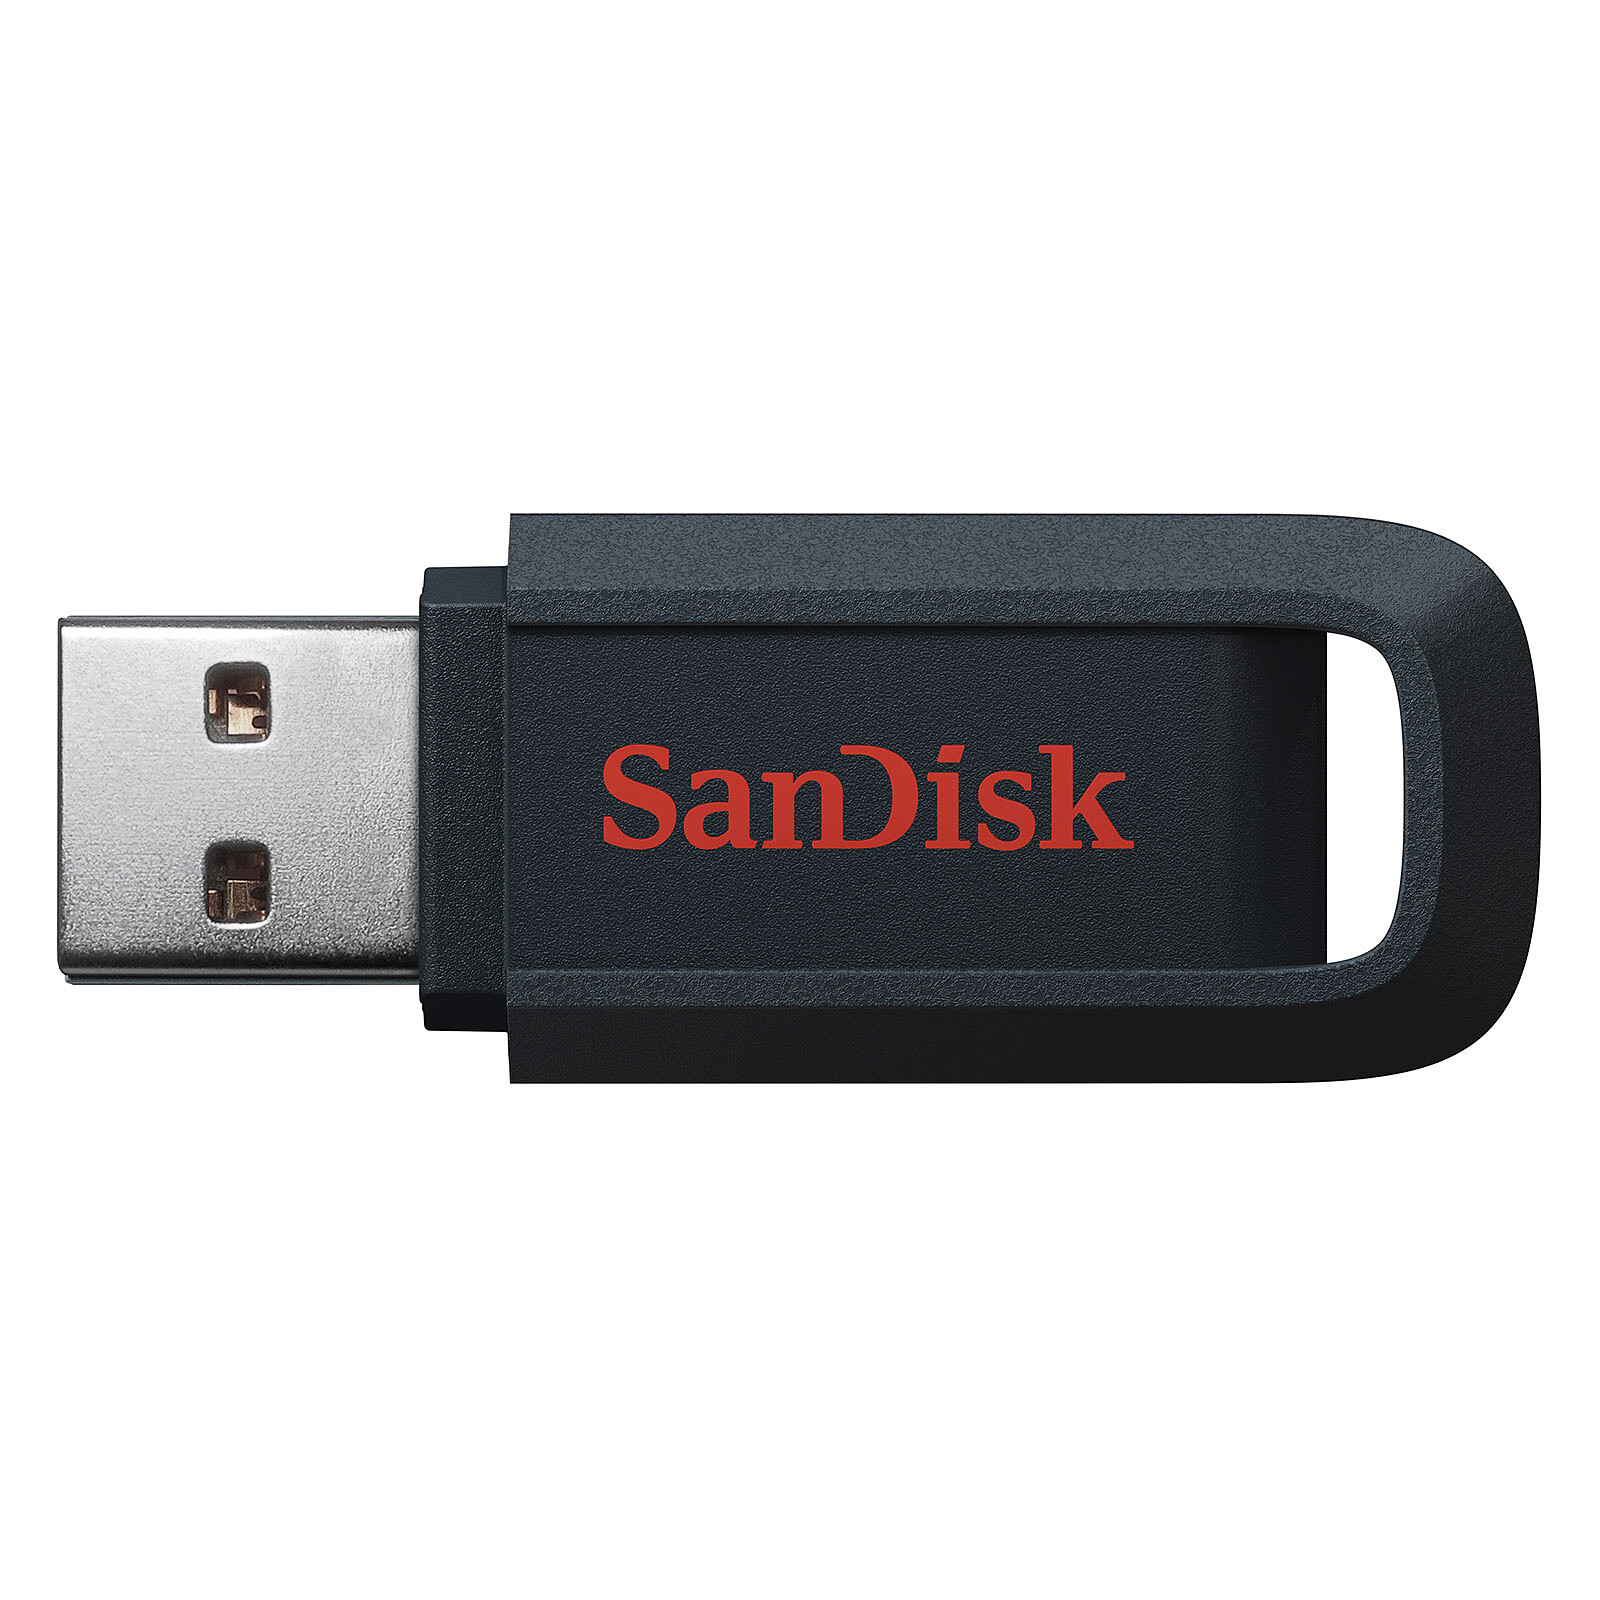 SanDisk Ultra Trek USB 3.0 - 128 GB - USB flash drive - LDLC 3-year  warranty